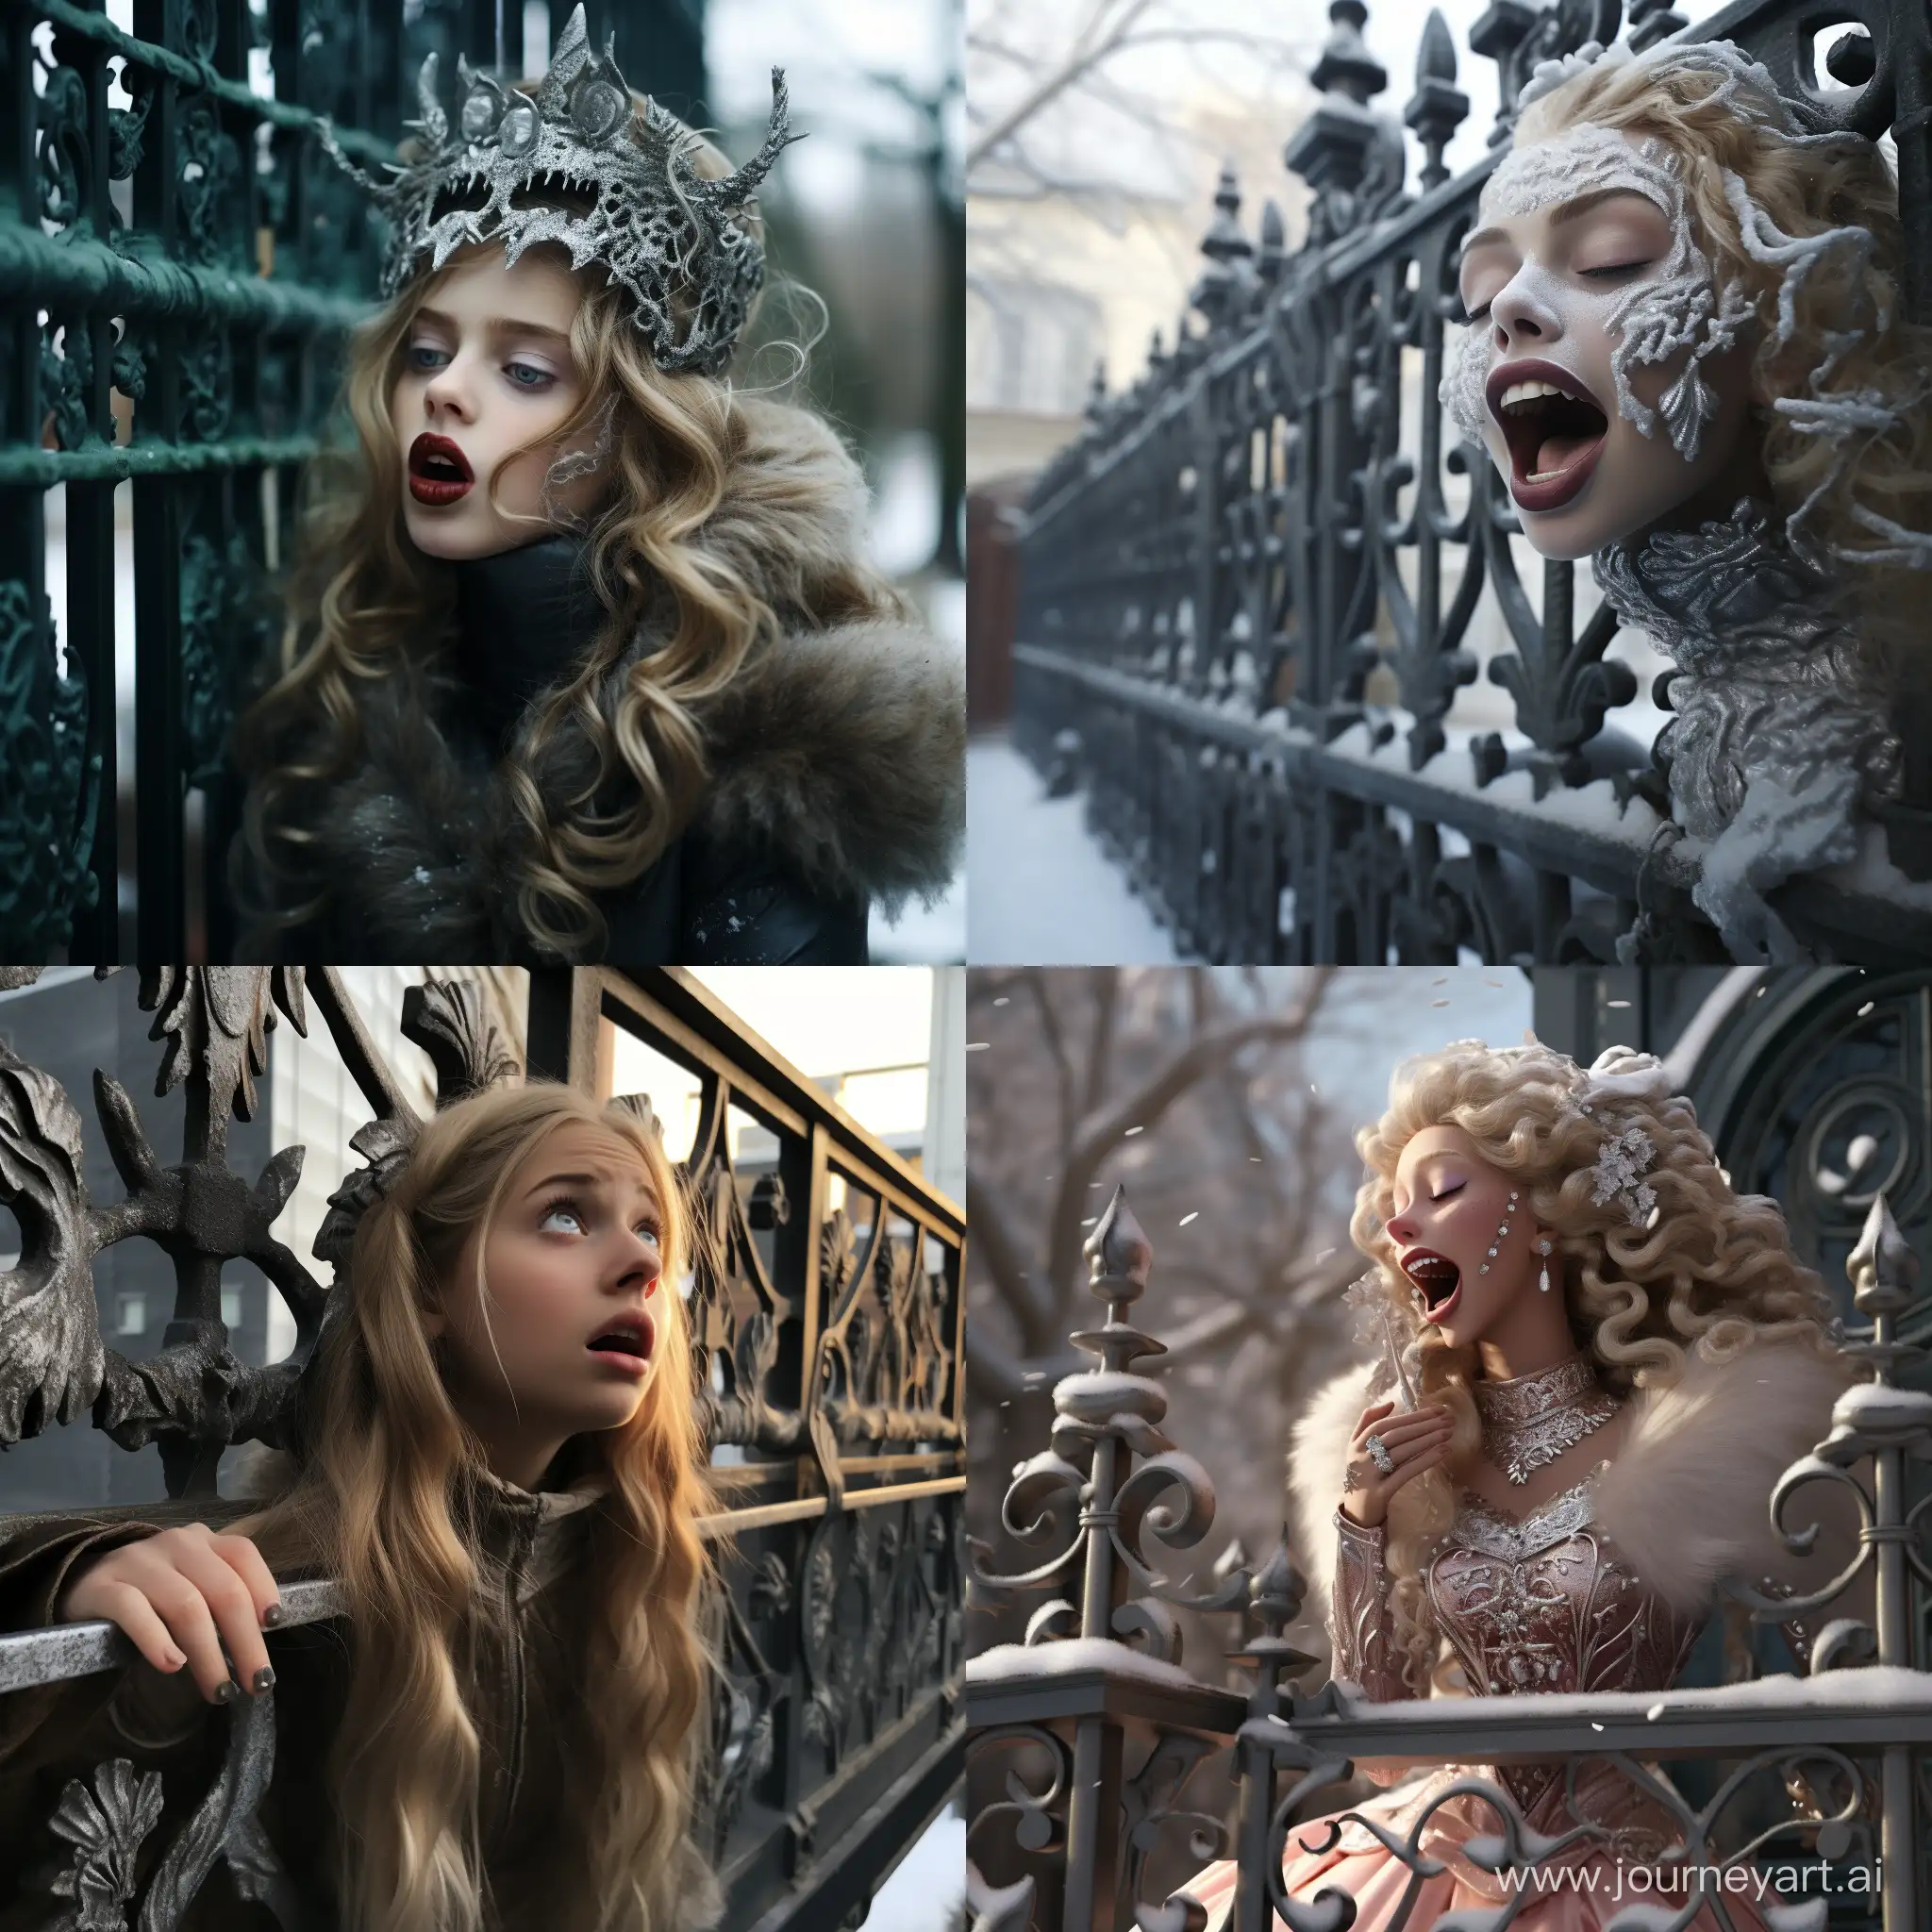 Frozen-Princess-Tongue-Stuck-on-Metal-Railings-Art